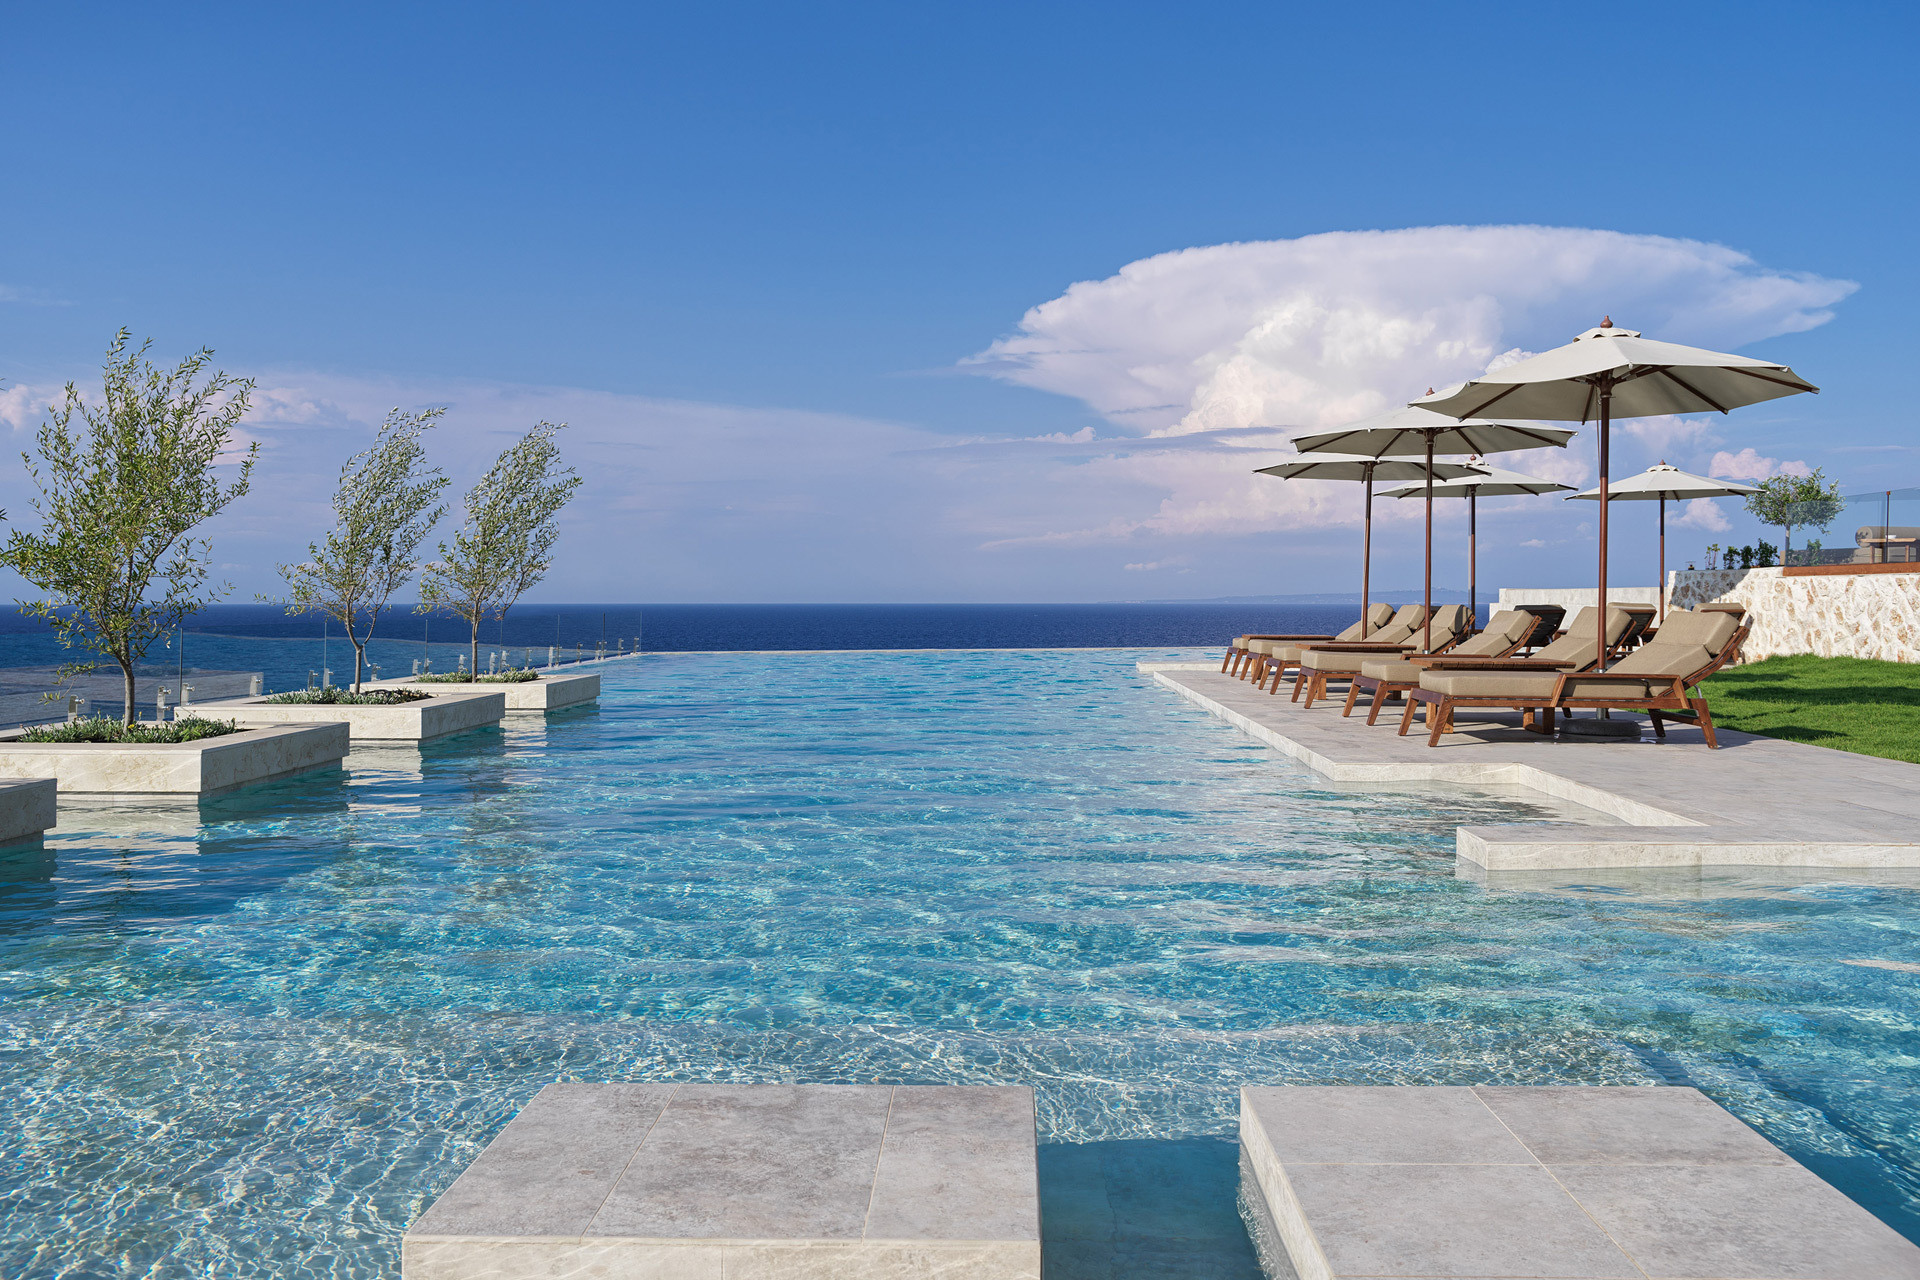 Hotel pool overlooking the sea